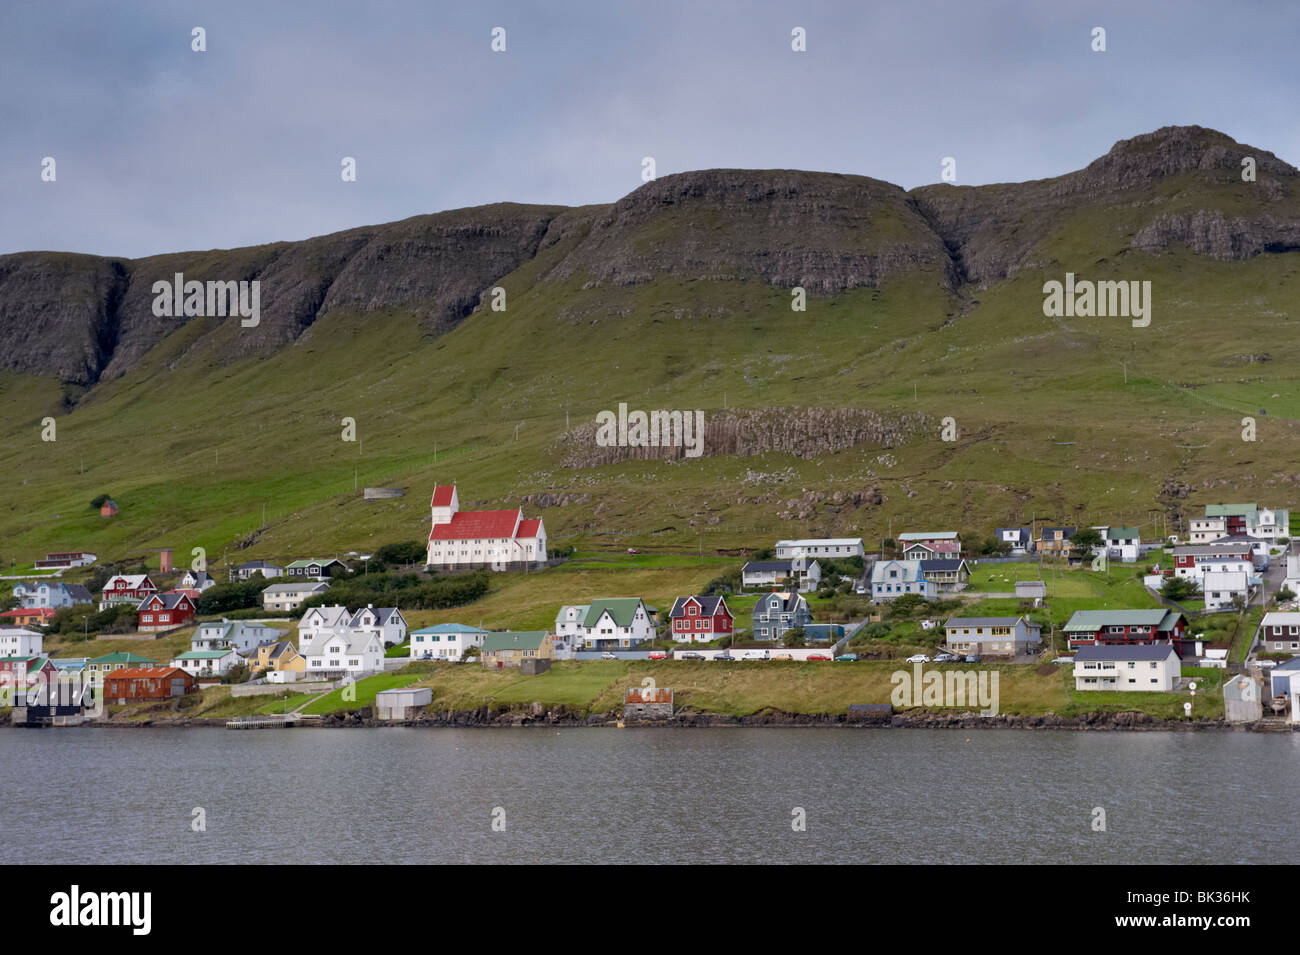 Tvoroyri, main village on Suduroy island, across Trongisvagsfjordur, Suduroy, Faroe Islands (Faroes), Denmark, Europe Stock Photo